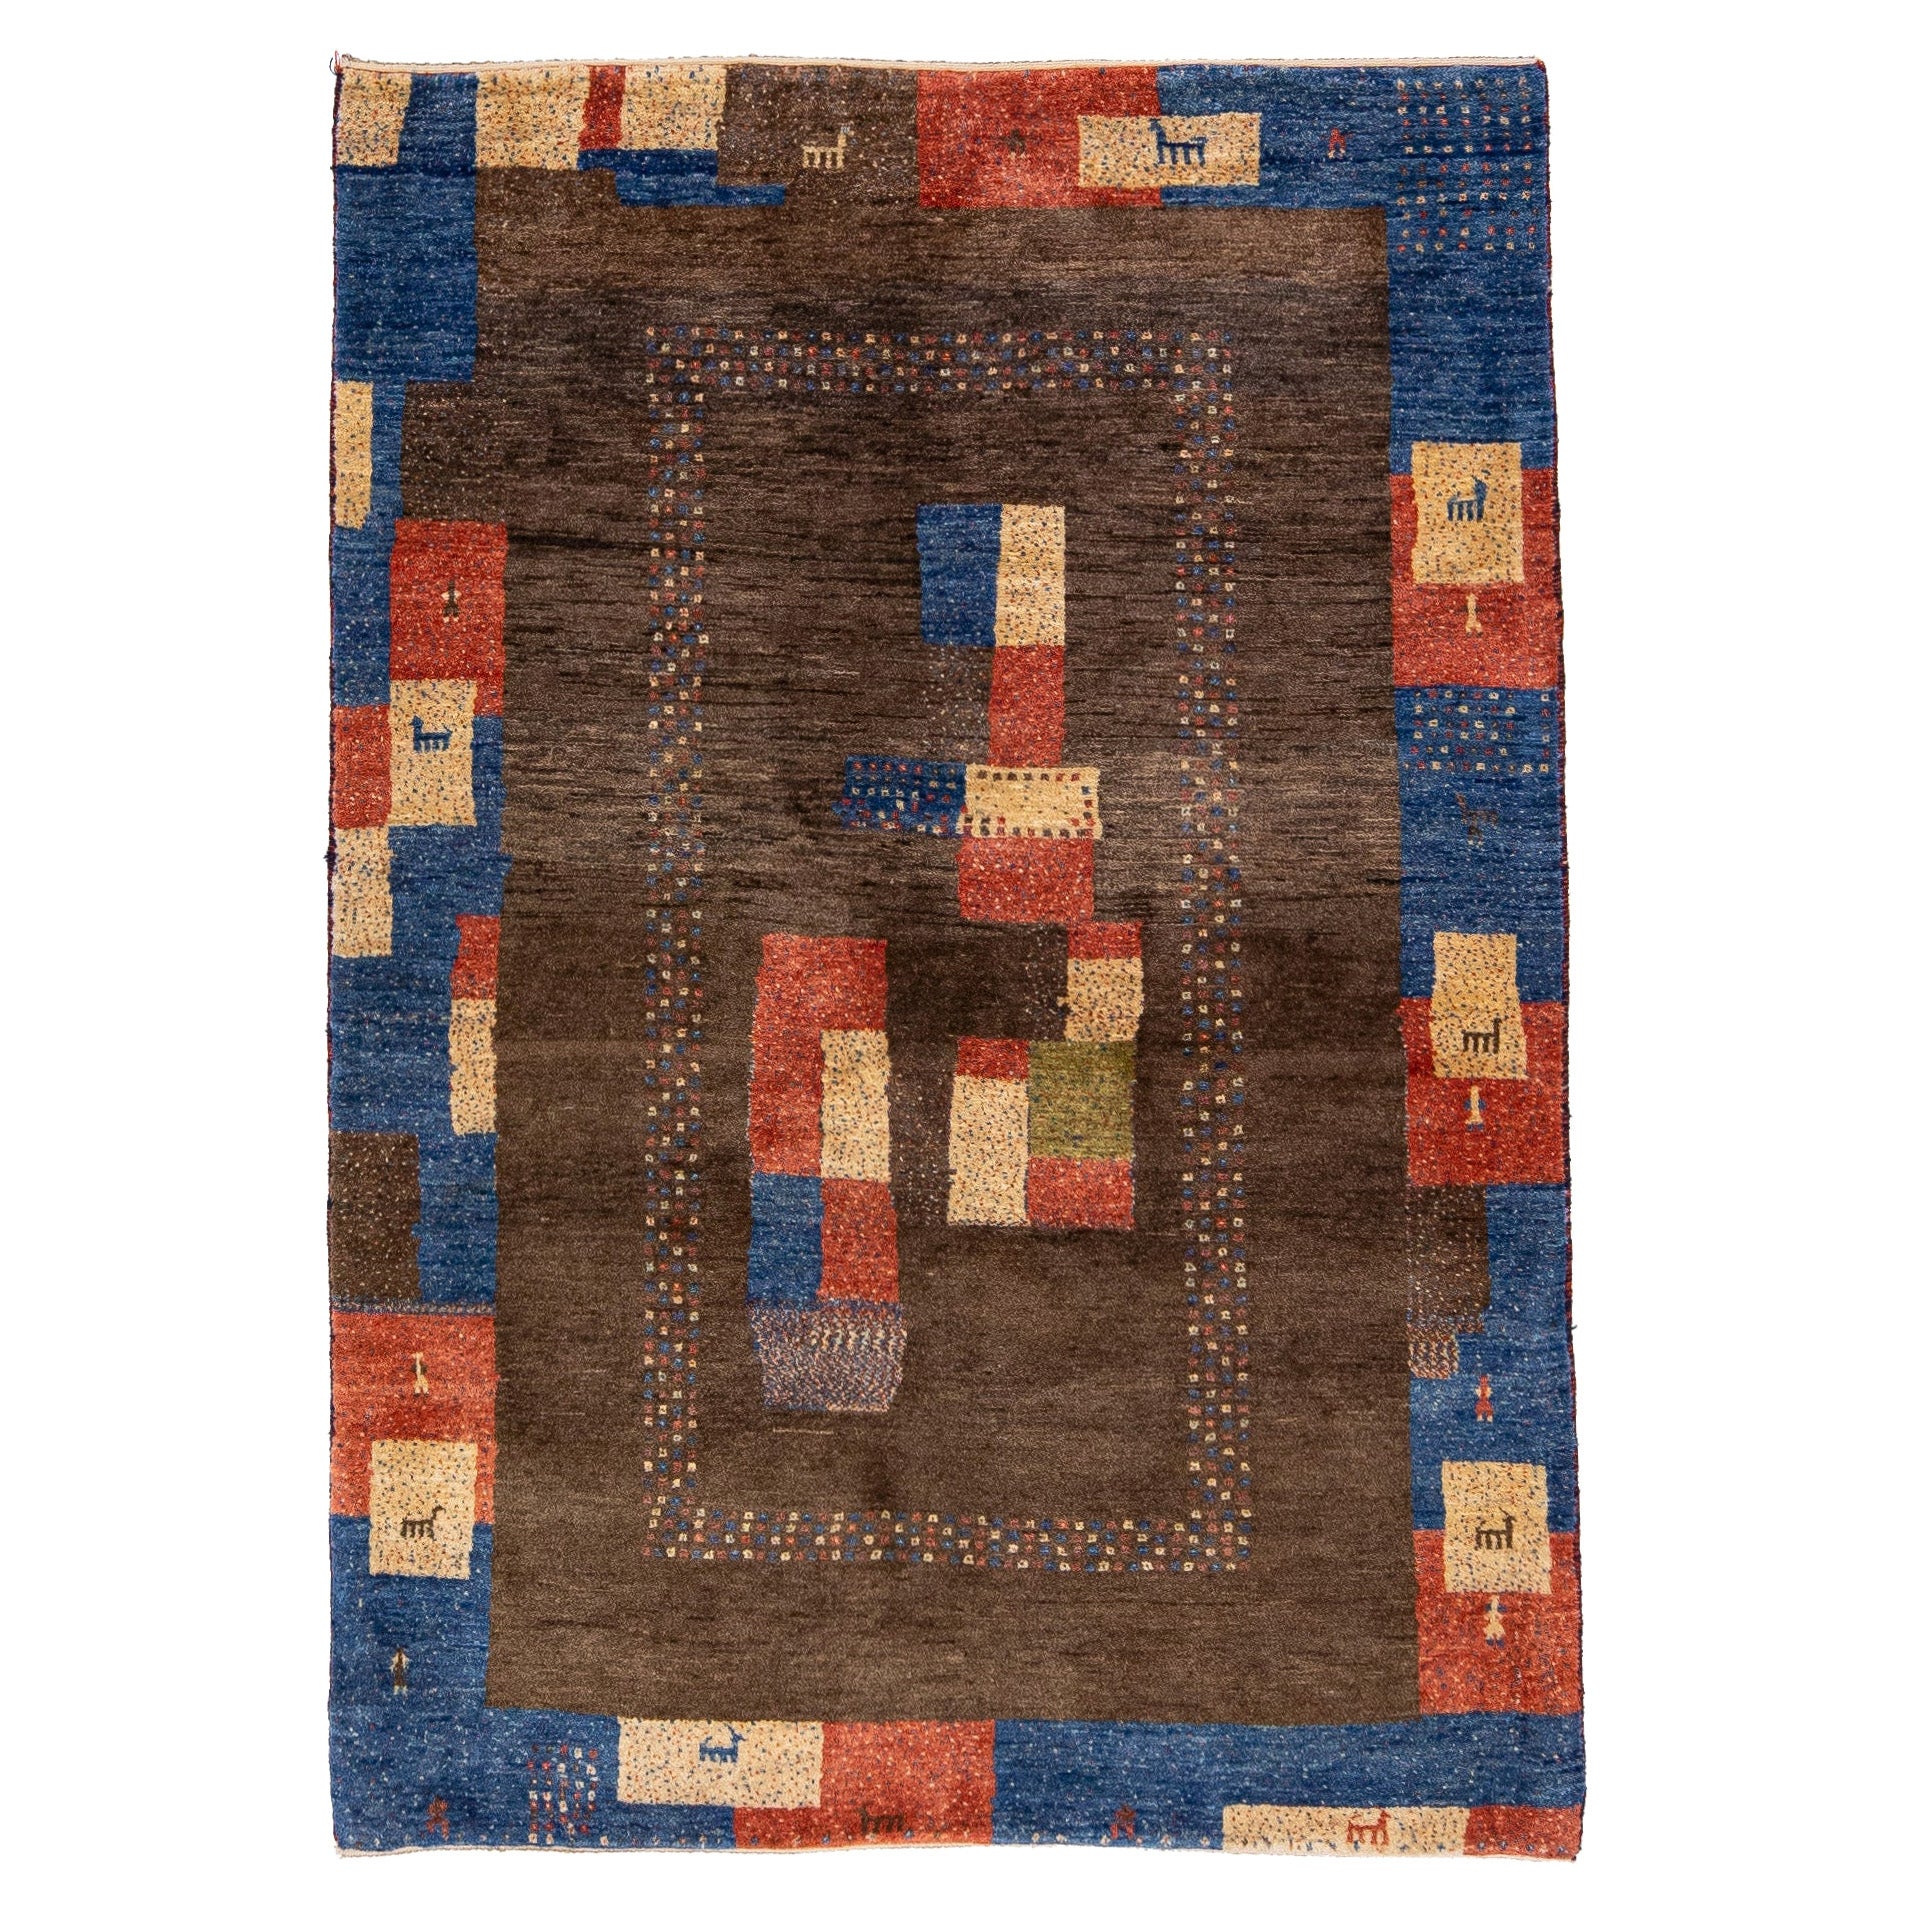 Modern Persian Gabbeh Brown Handmade Wool Rug Geometric Motif